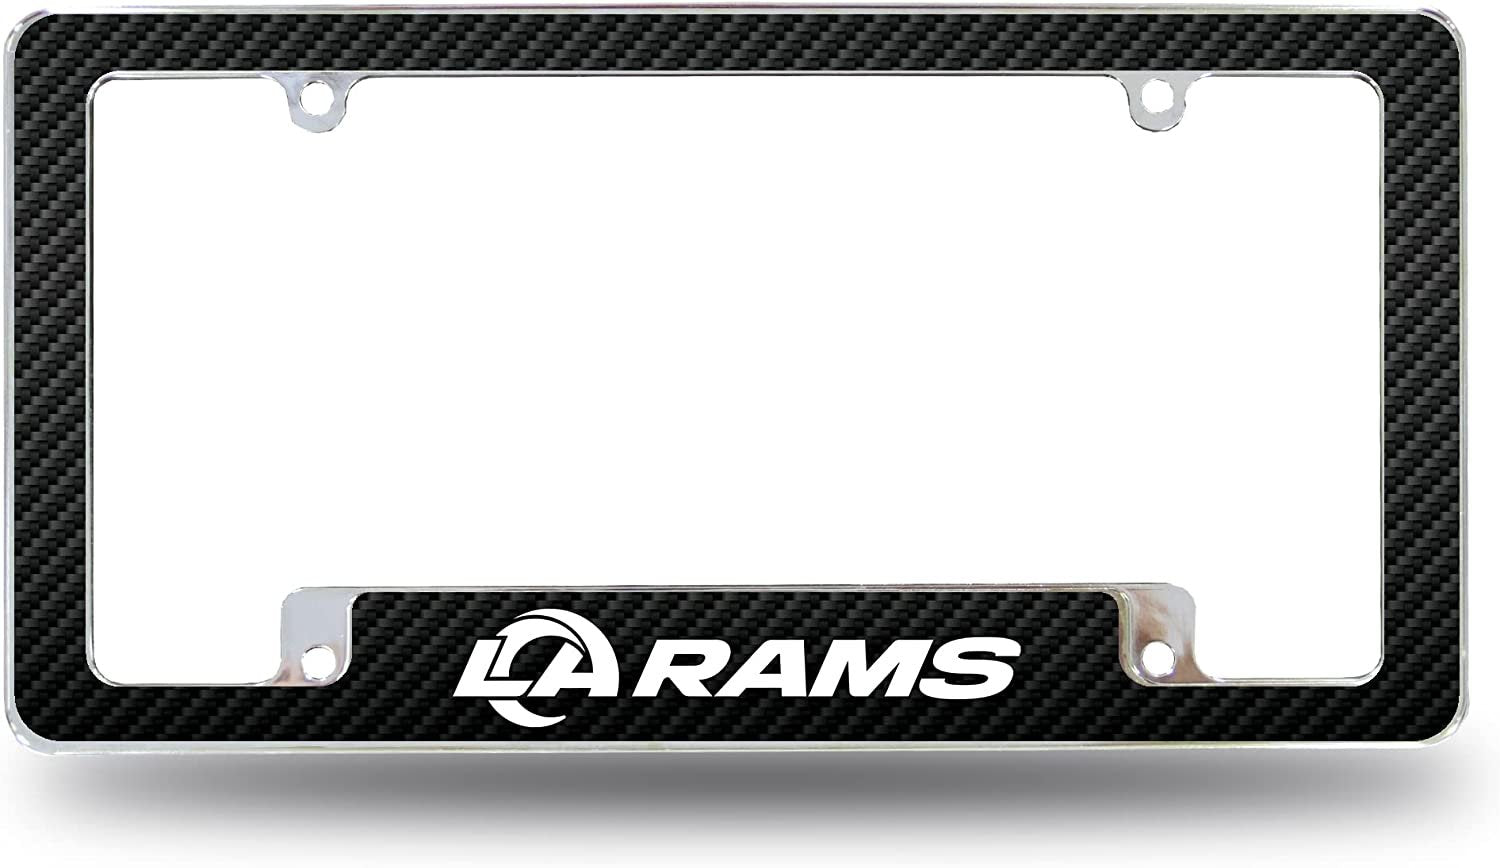 Los Angeles Rams Metal License Plate Frame Chrome Tag Cover Carbon Fiber Design 6x12 Inch